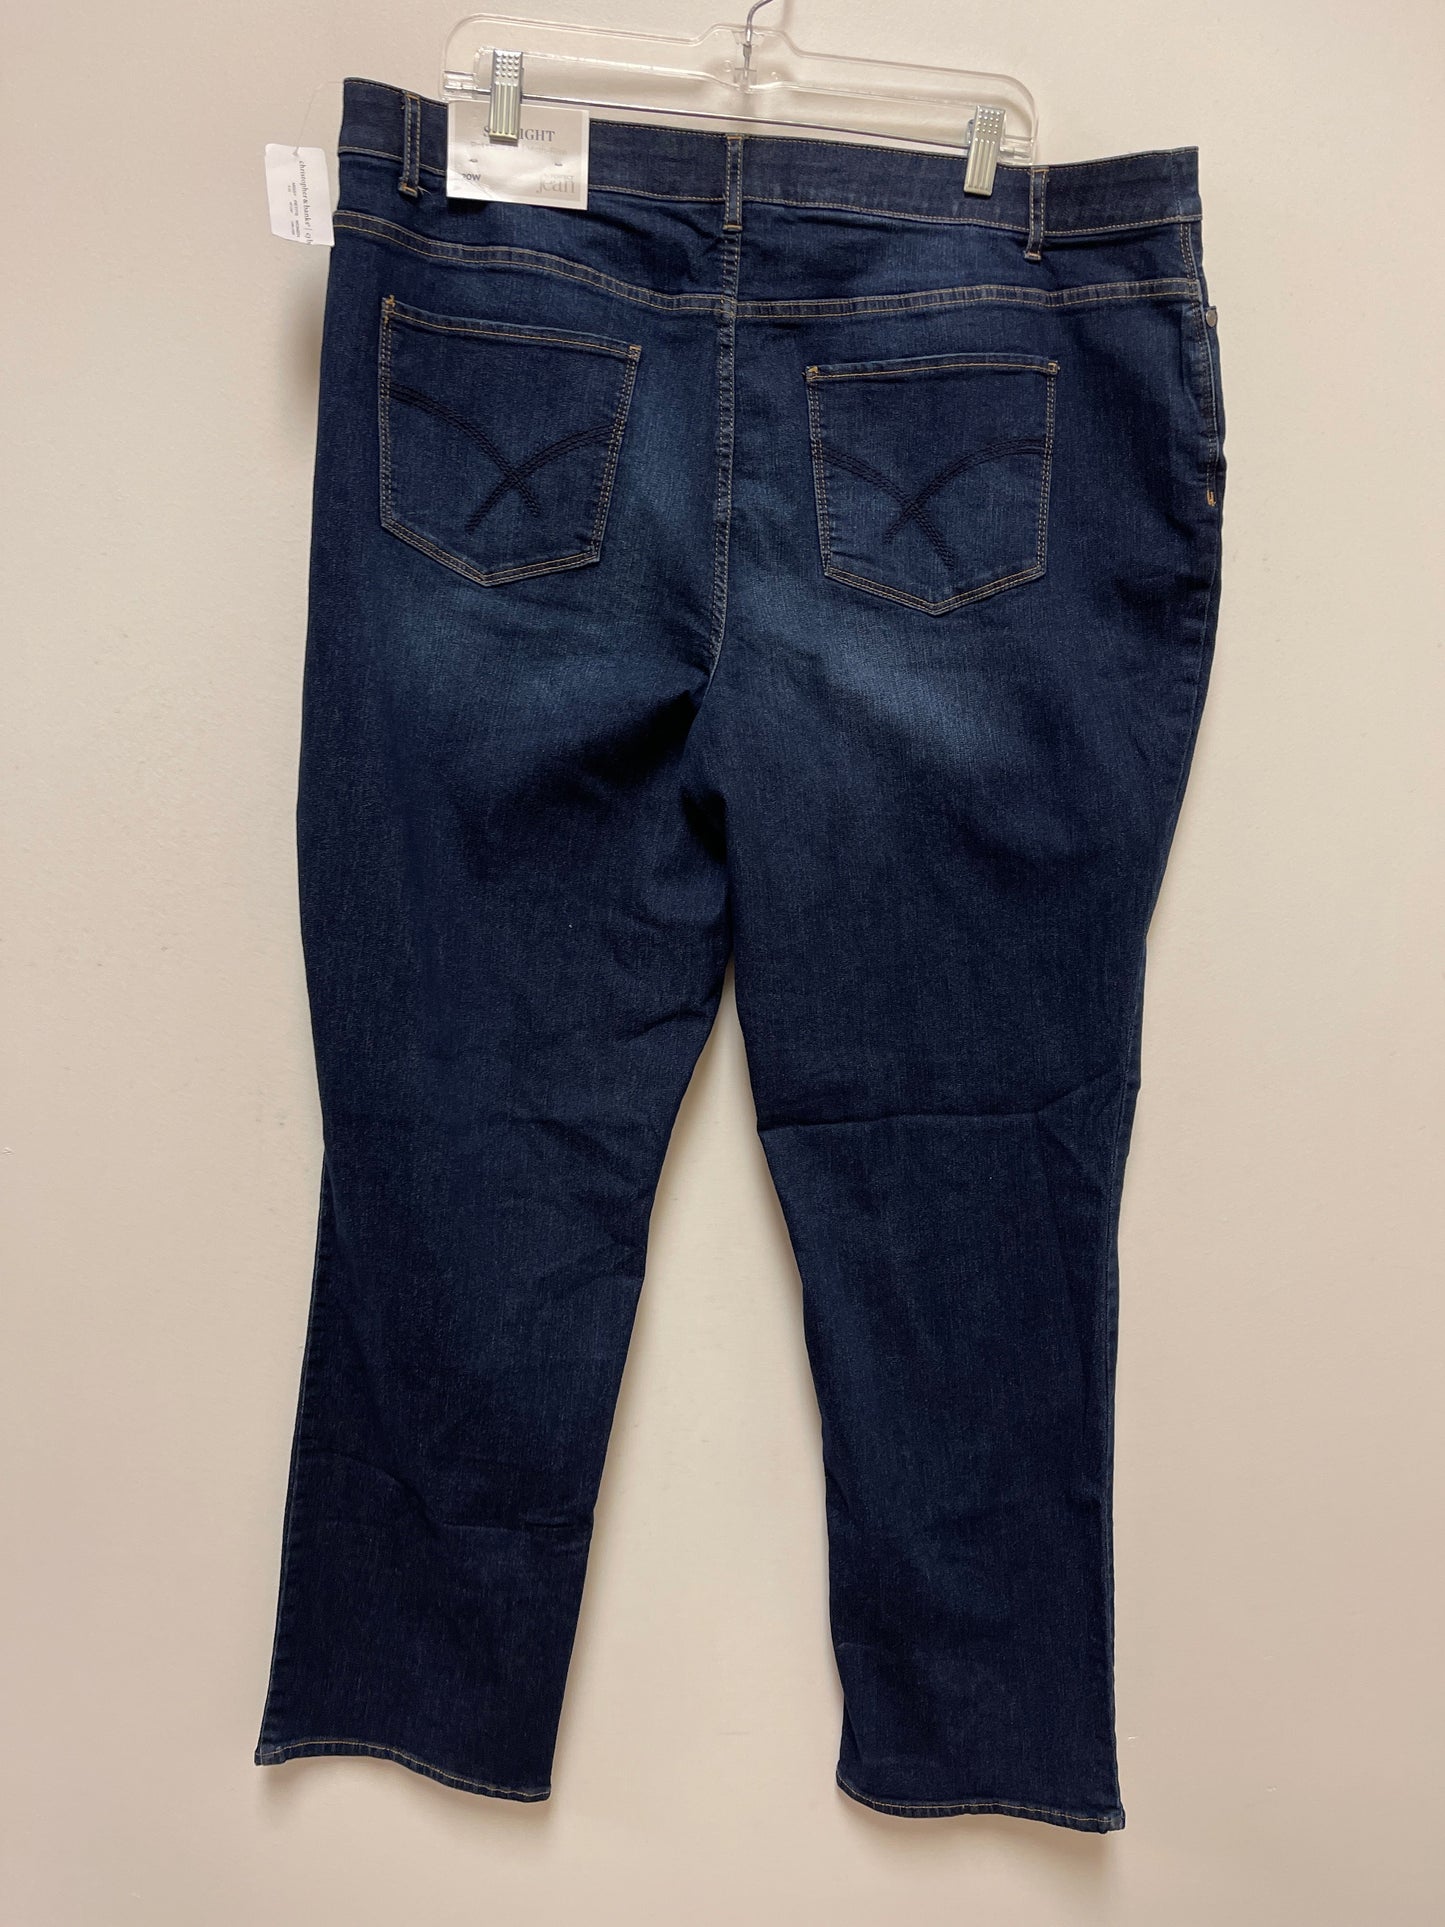 Blue Denim Jeans Straight Cj Banks, Size 20